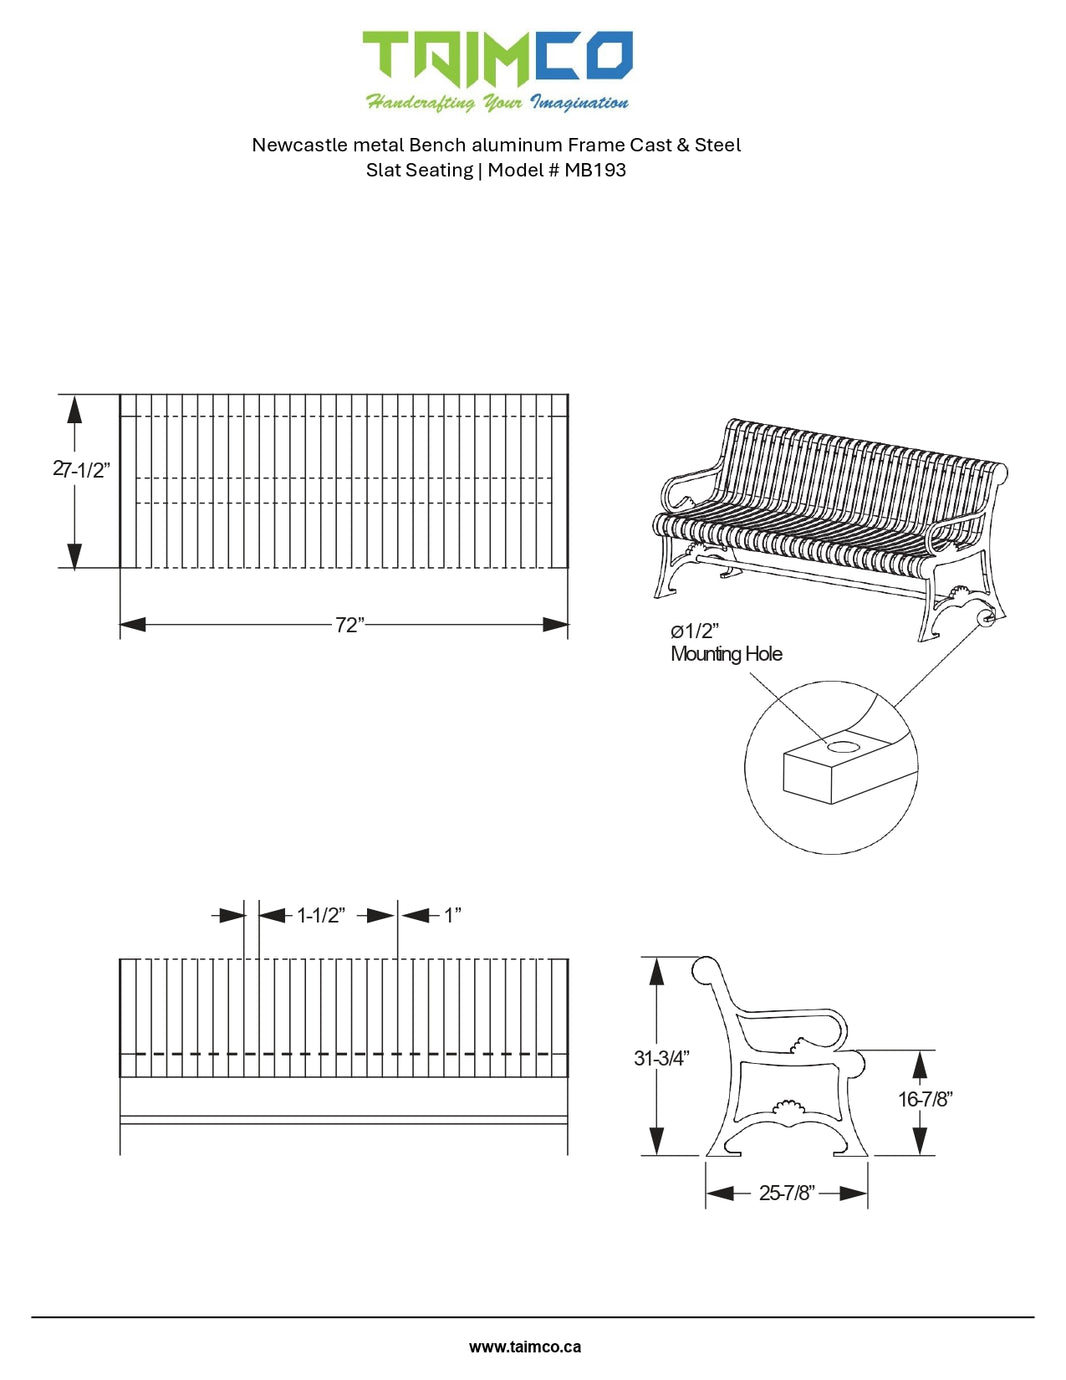 Newcastle metal Bench aluminum Frame Cast & Steel Slat Seating | Model # MB193-Taimco